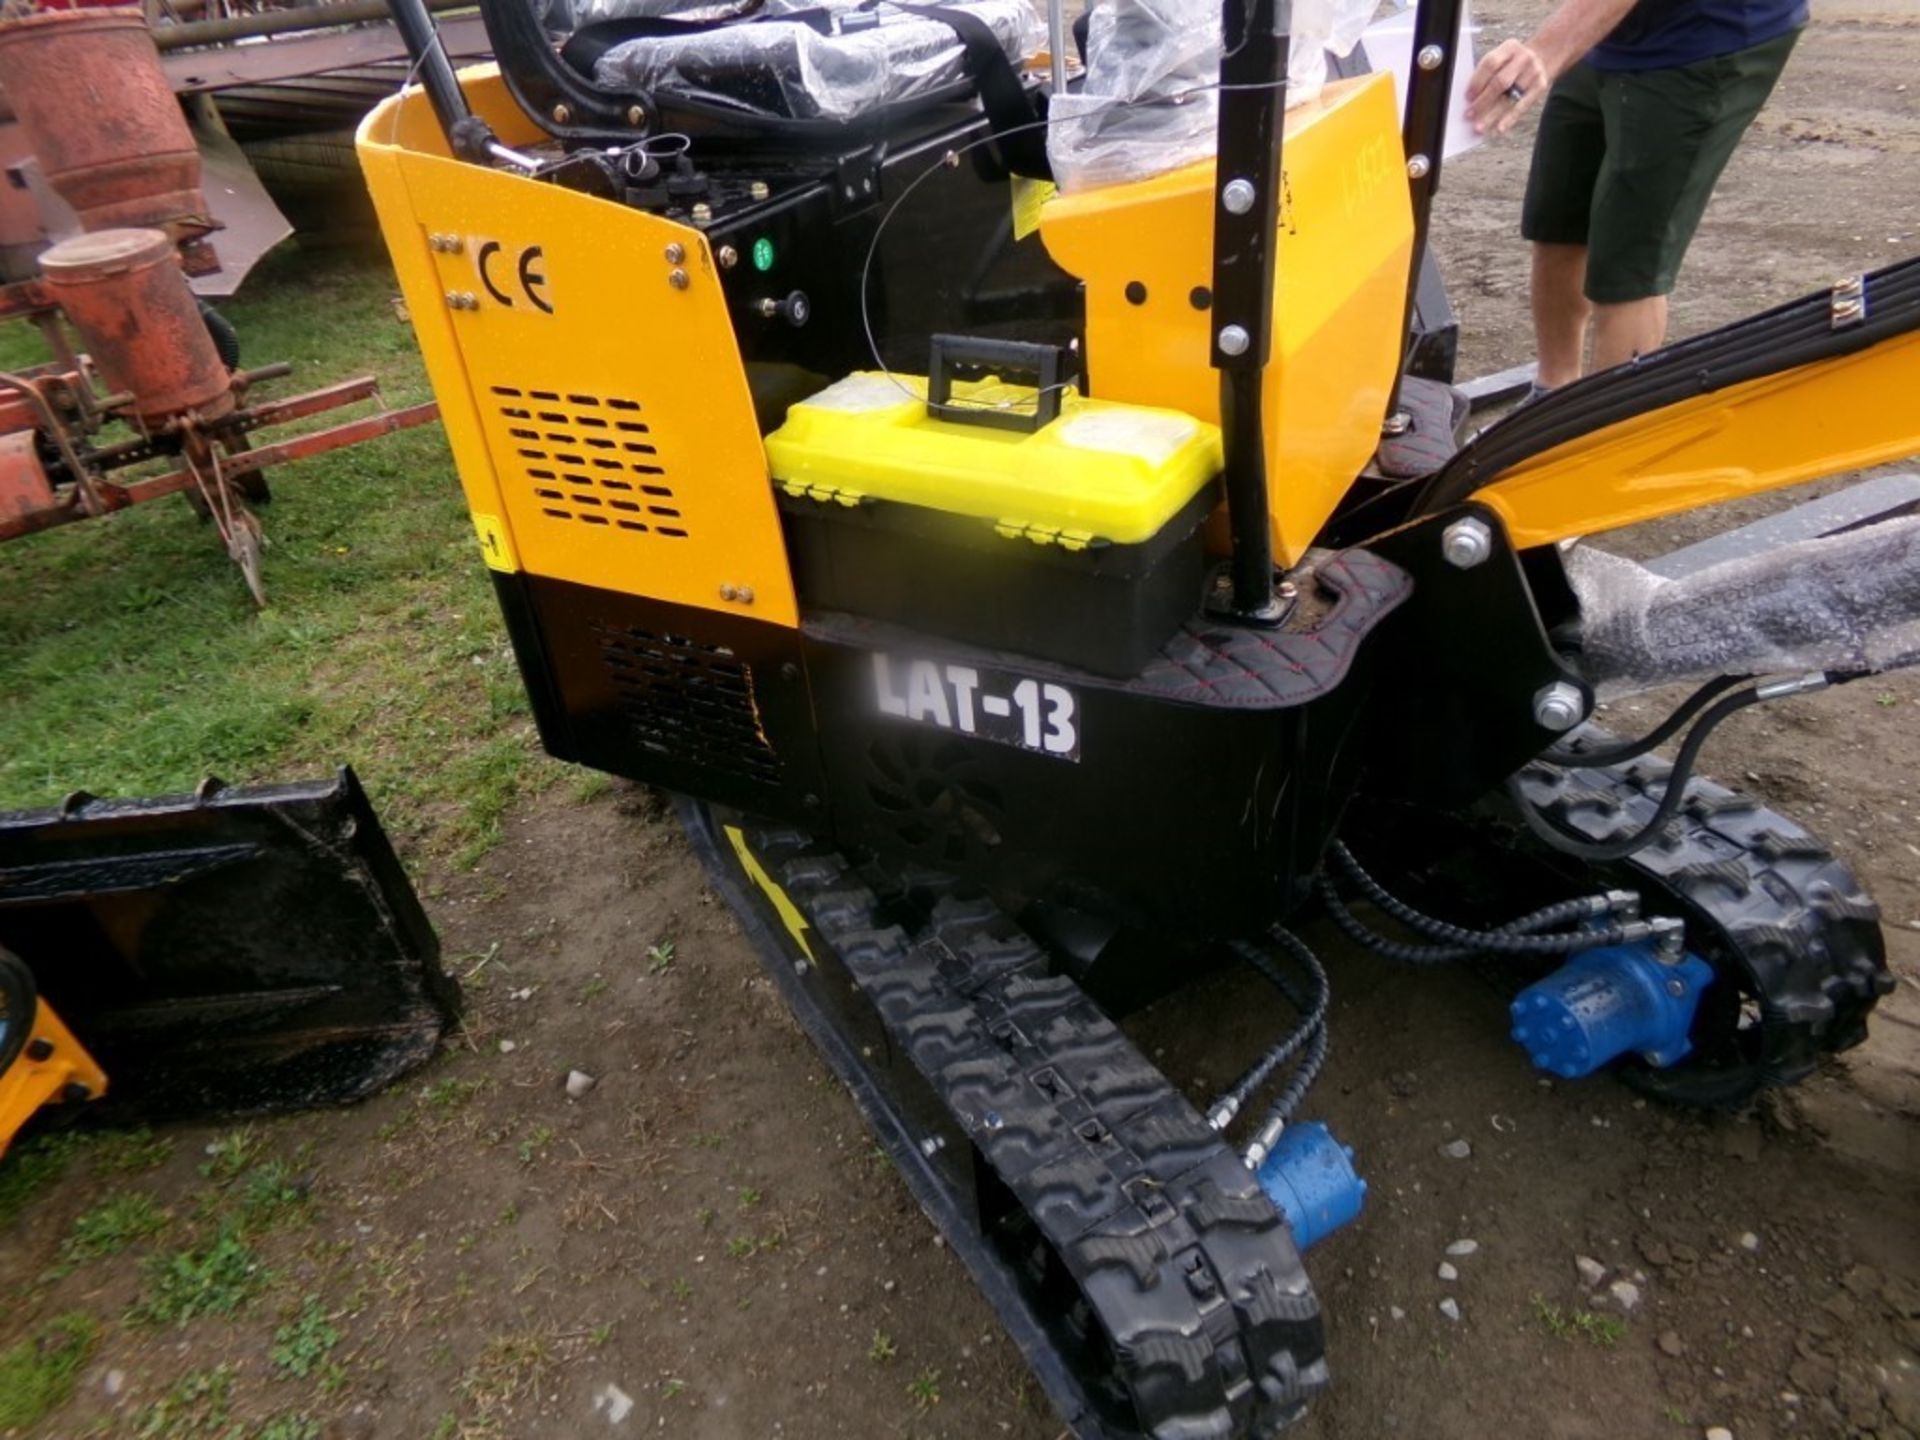 New Mini Excavator, Lanty LAT13, Yellow, Ser. 240203 (4674) - Image 2 of 3